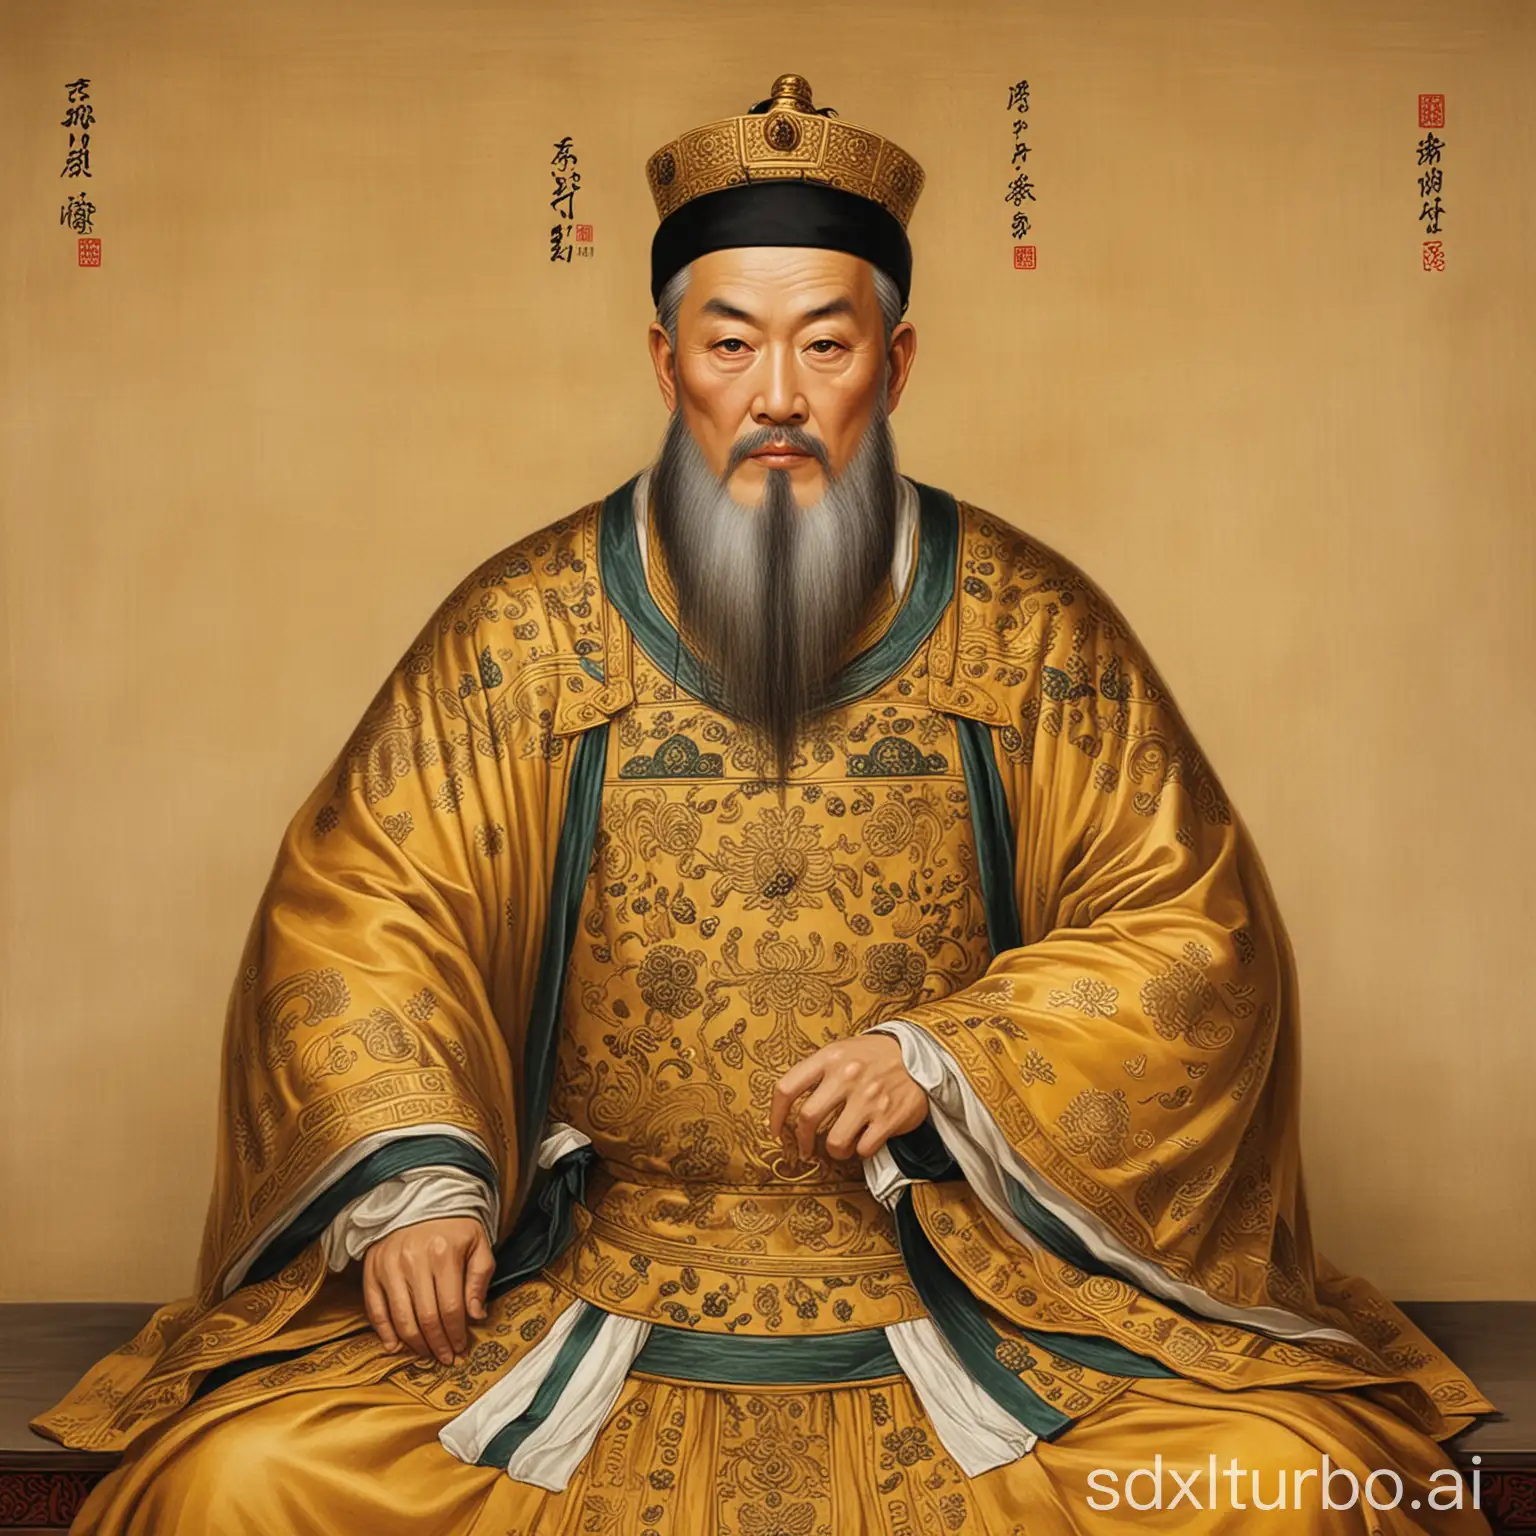 Northern-Qi-Emperor-Gao-Yang-Portrait-Majestic-Ruler-in-Traditional-Regal-Attire